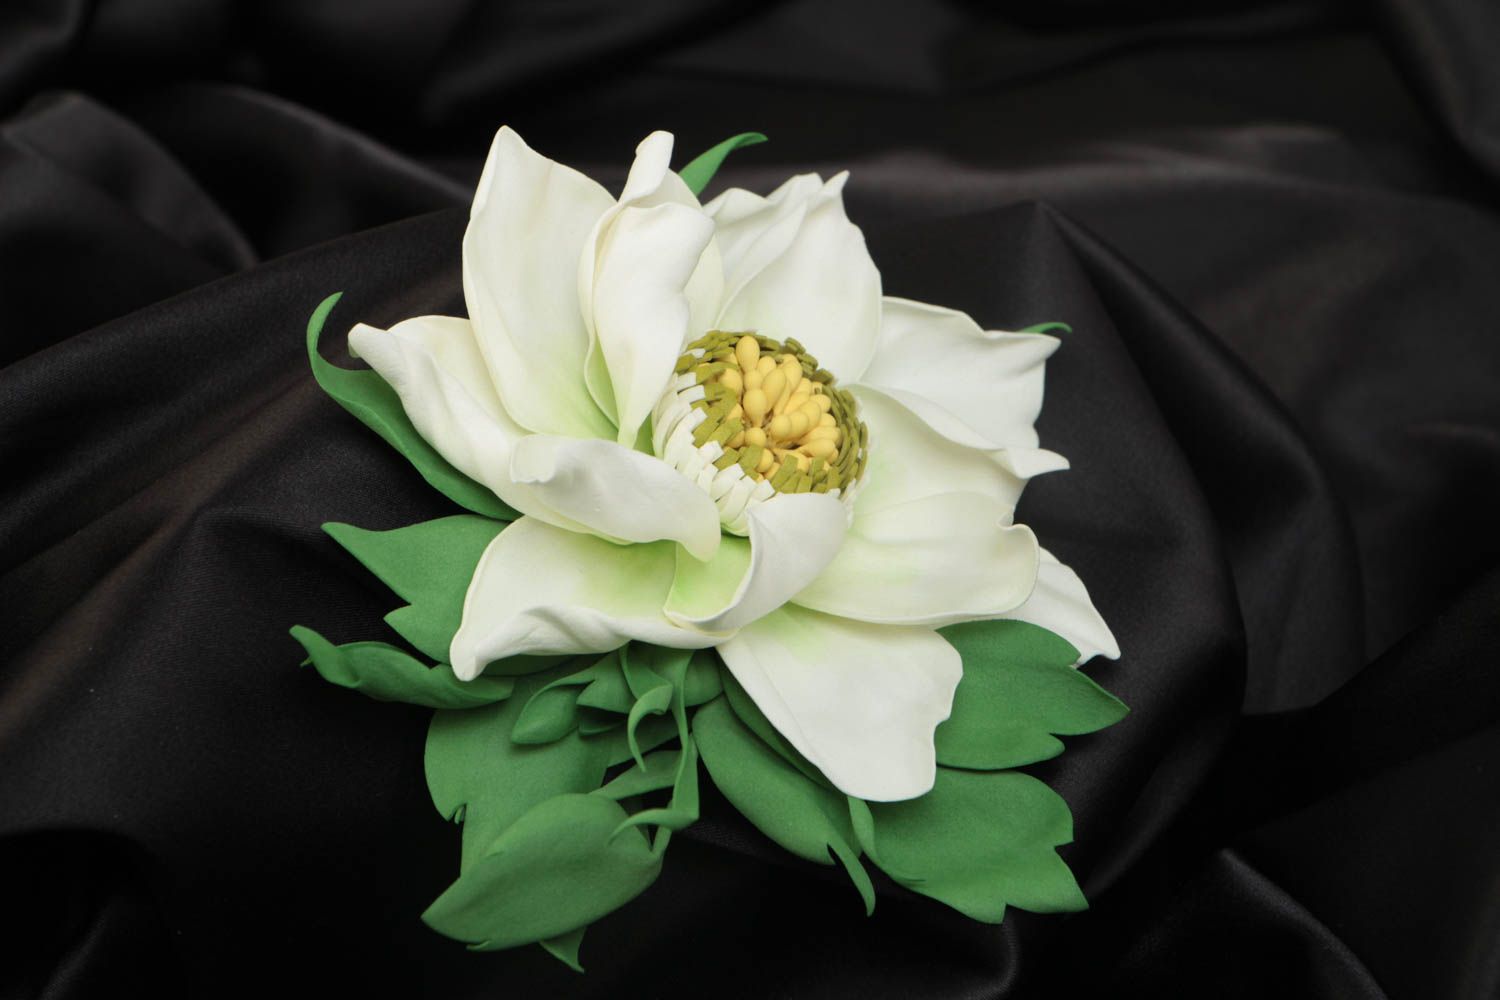 Broche barrette en foamiran belle grande fleur blanche verte faite main photo 1